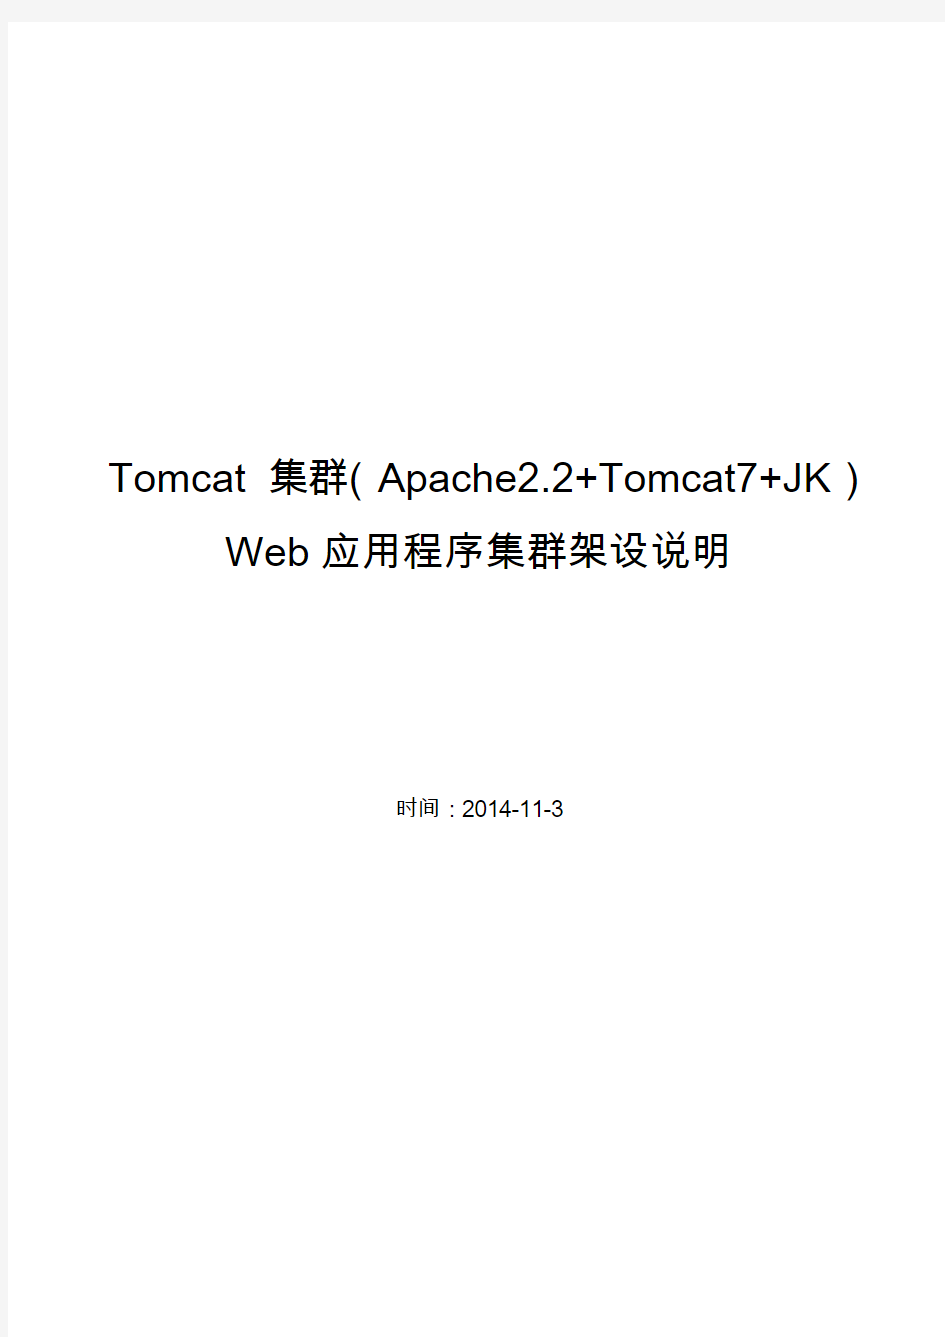 Tomcat集群(Apache2.2+Tomcat7+jk)配置方法